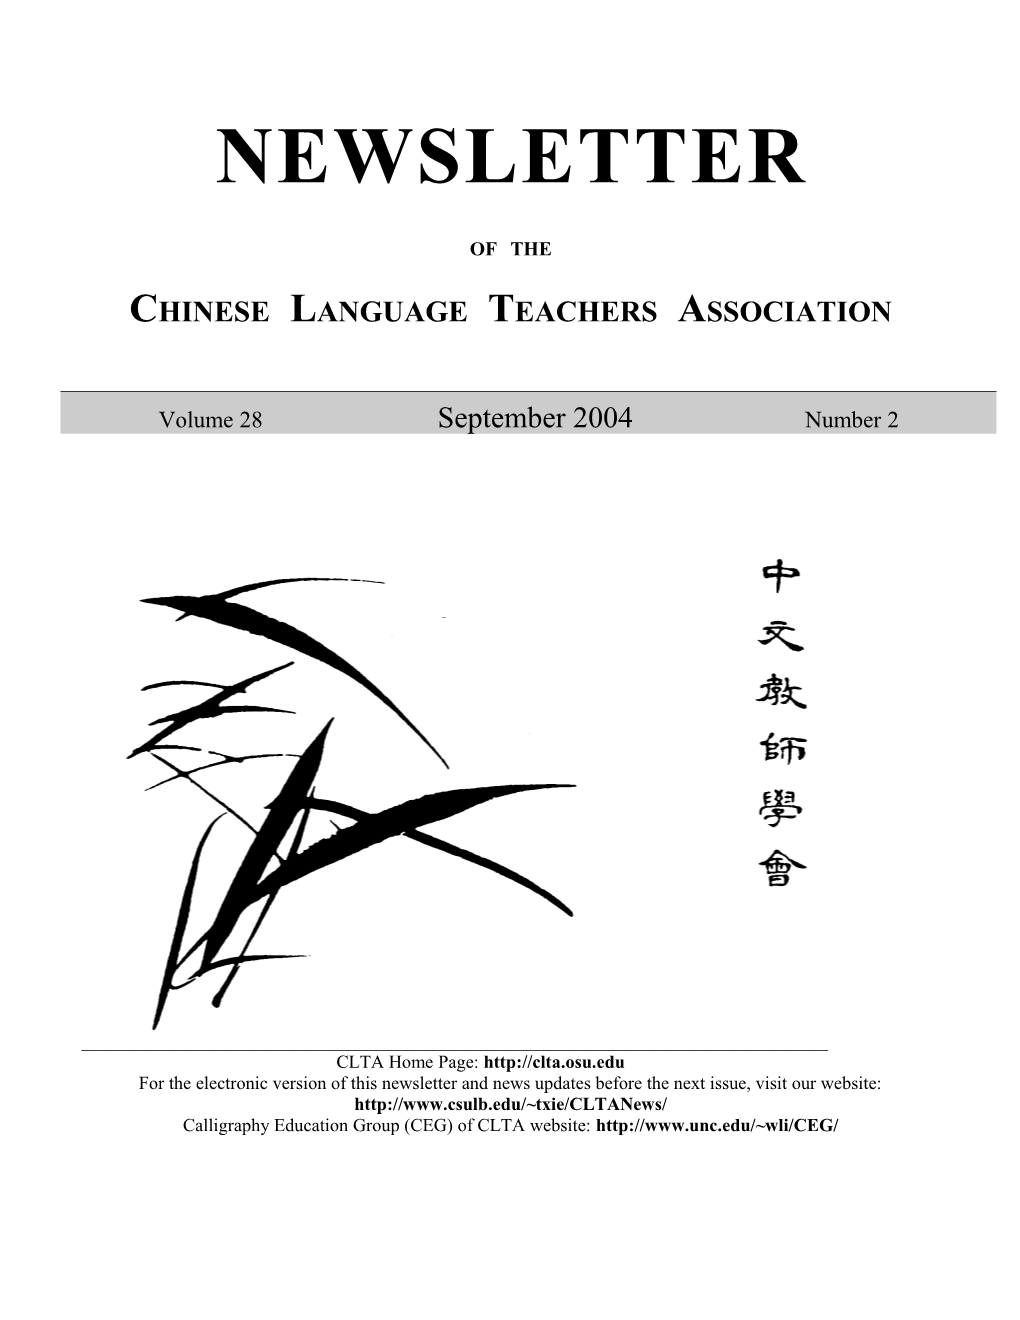 Chinese Language Teachers Association